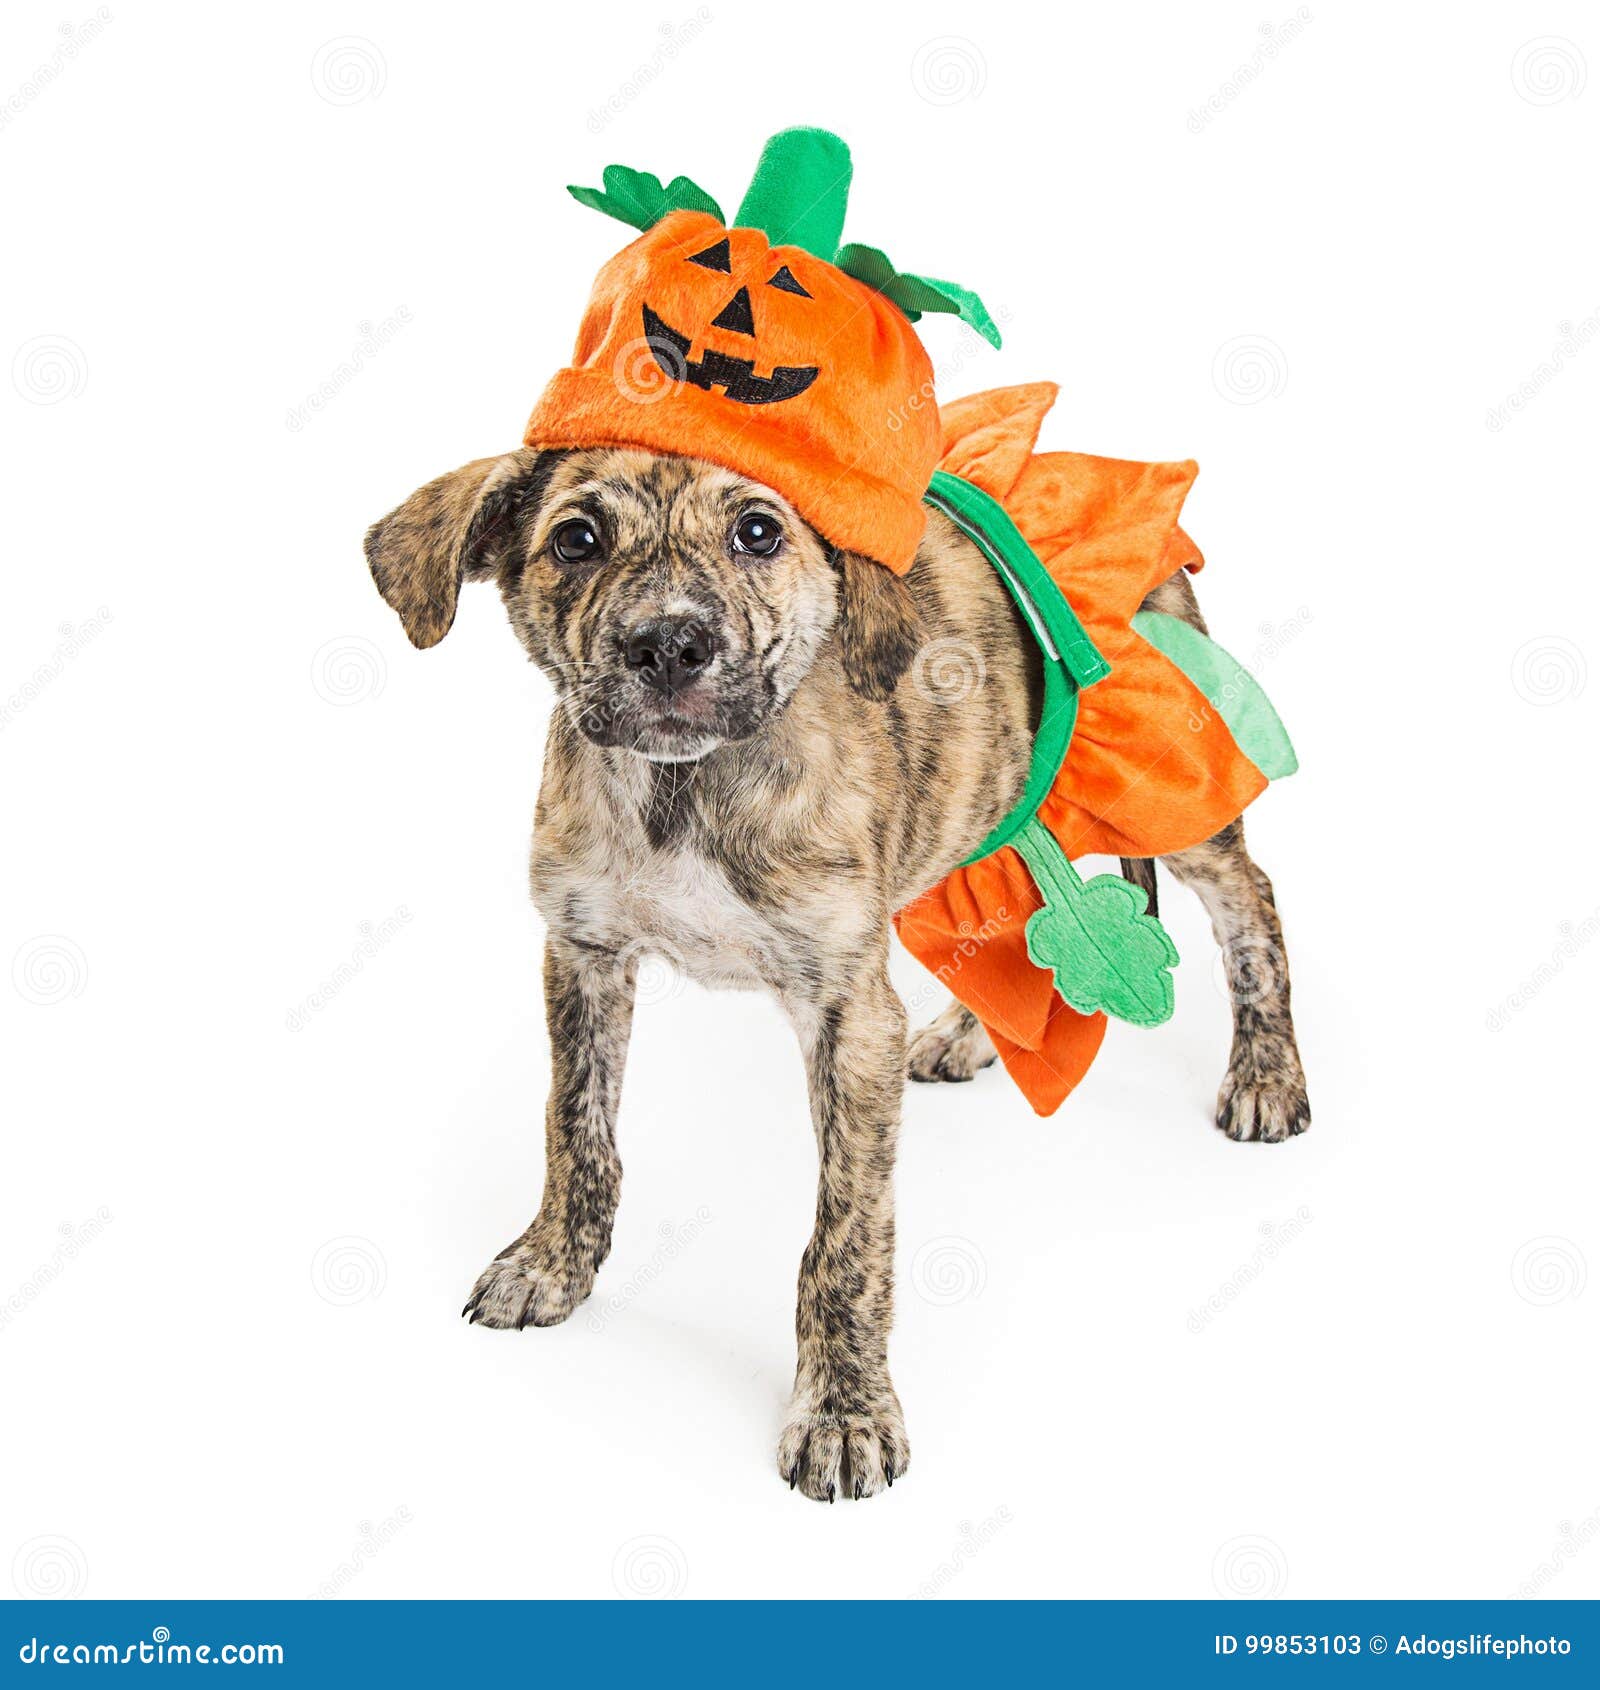 Cute Puppy in Pumpkin Halloween Costume Stock Image - Image of jack ...